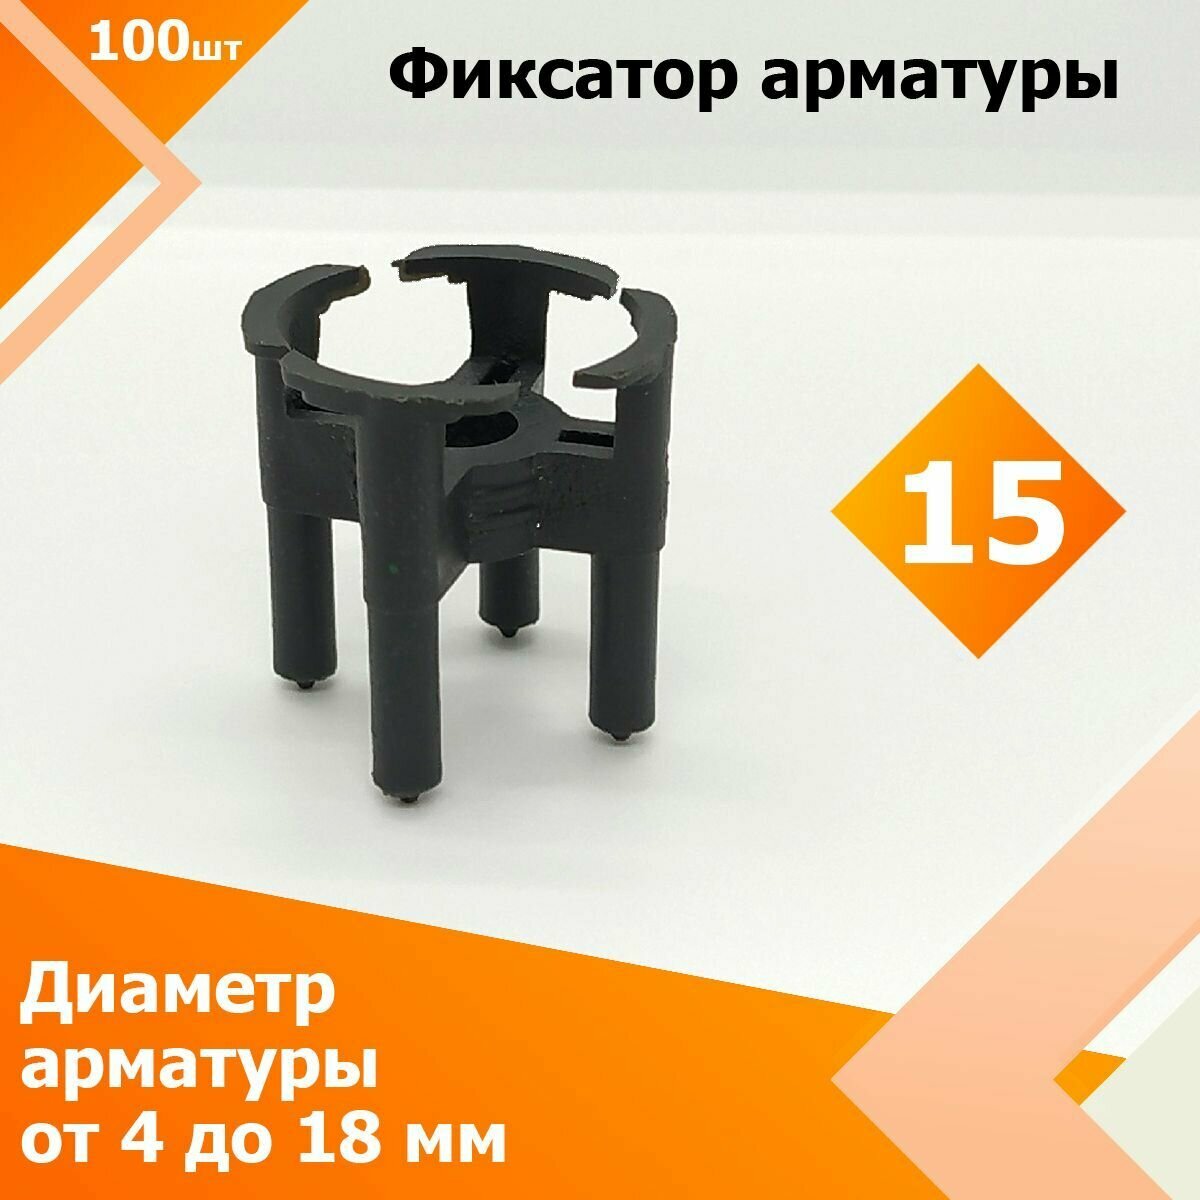 Фиксатор арматуры "Стульчик" 15 мм (100 шт.) (Диаметр арматуры от 4 до 18 мм)